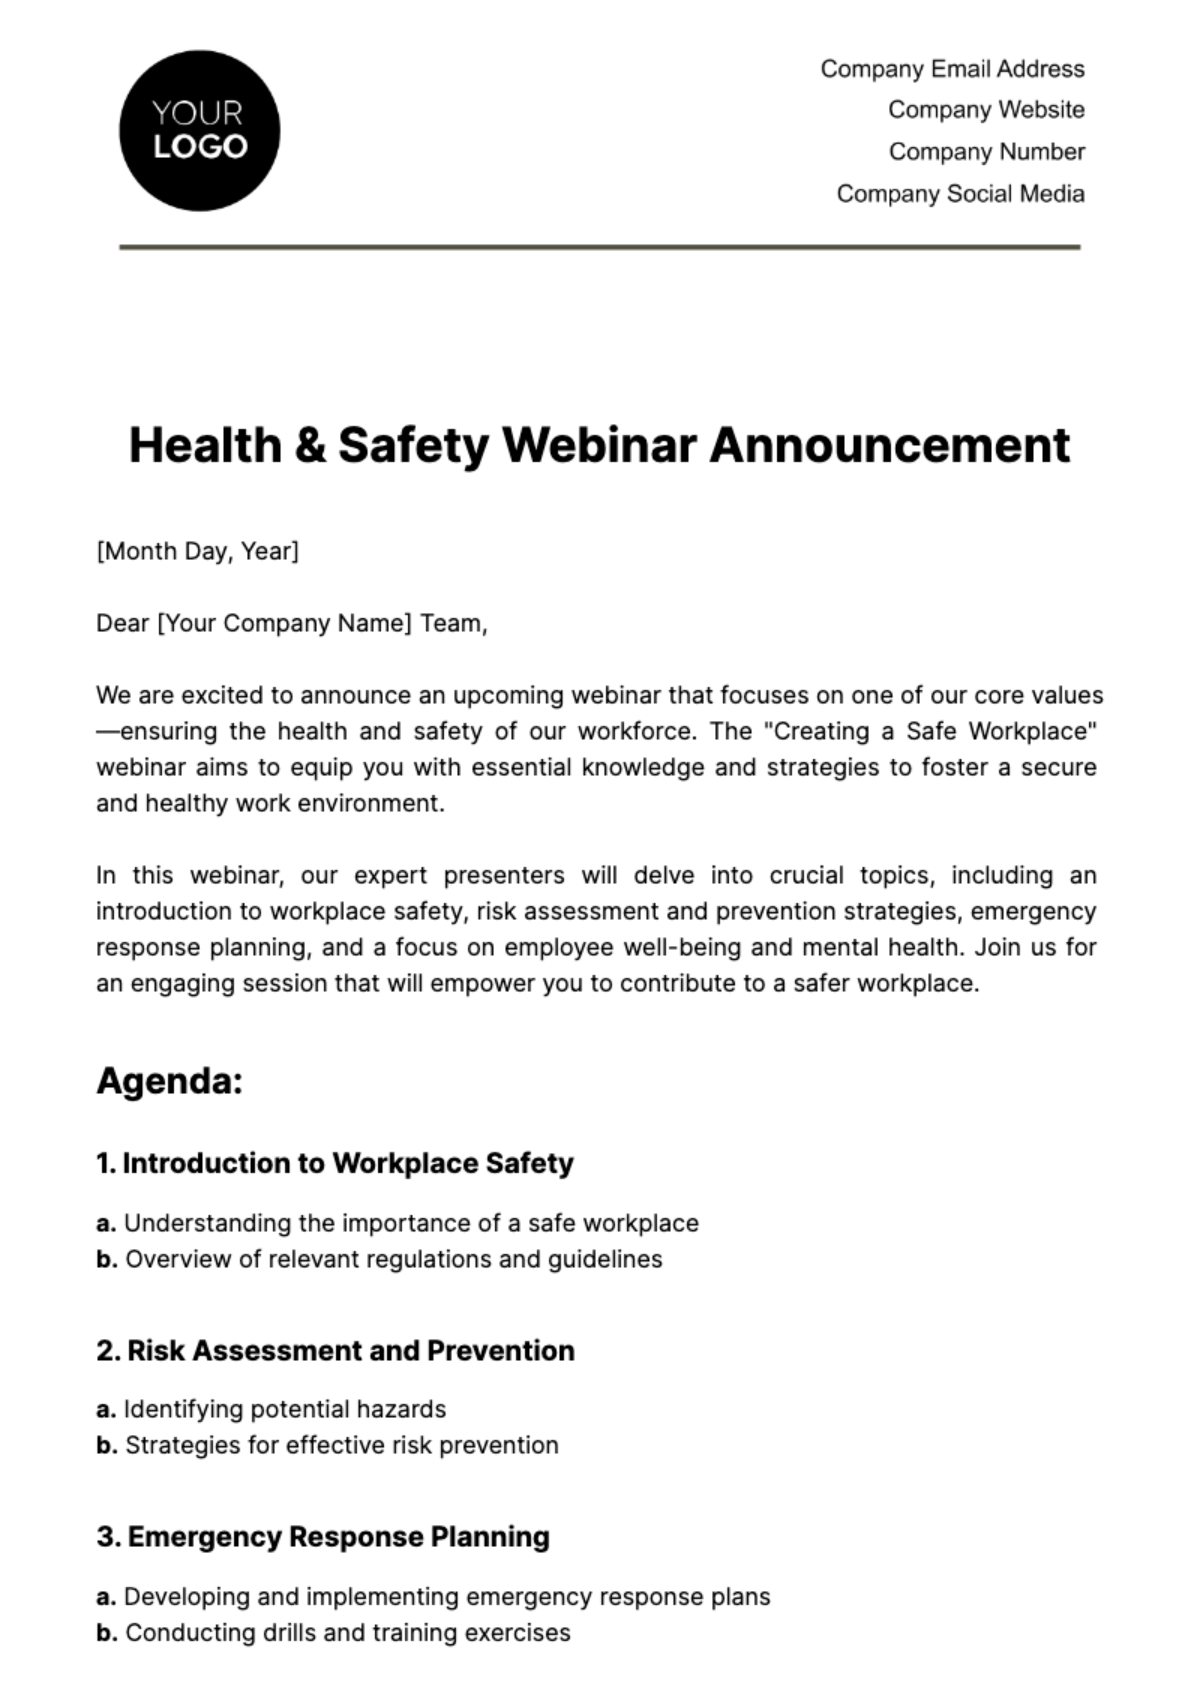 Health & Safety Webinar Announcement Template